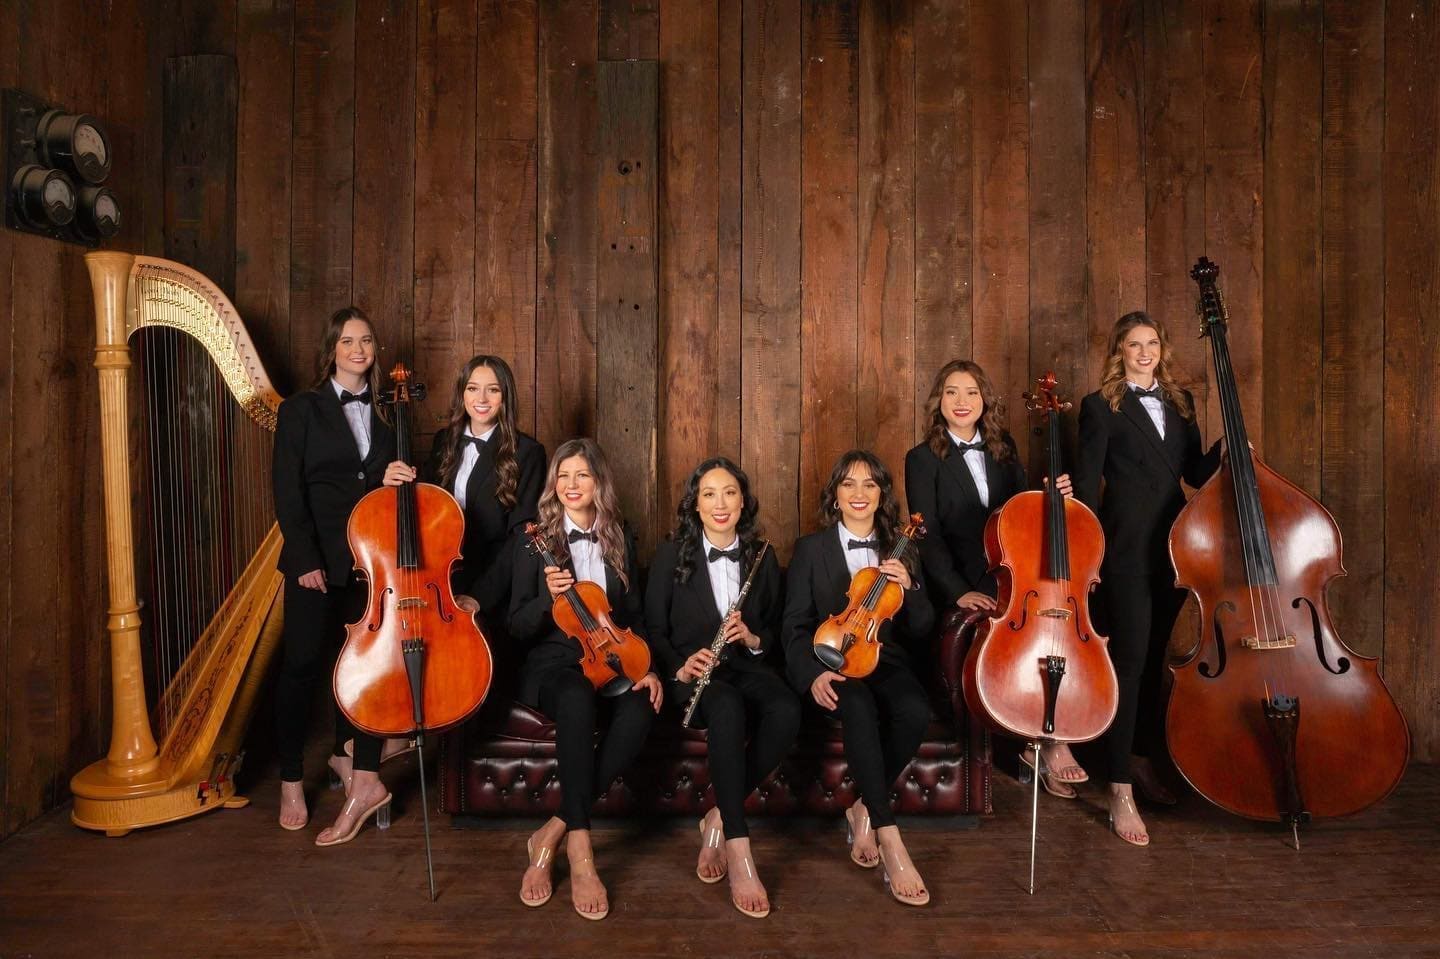 popular-string-quartets-musical-ensembles-cello-and-violin-players-for-wedding-ceremony-music-cadena-strings-sydney-melbourne-brisbane-adelaide-australia-photo-@bforbeatrix